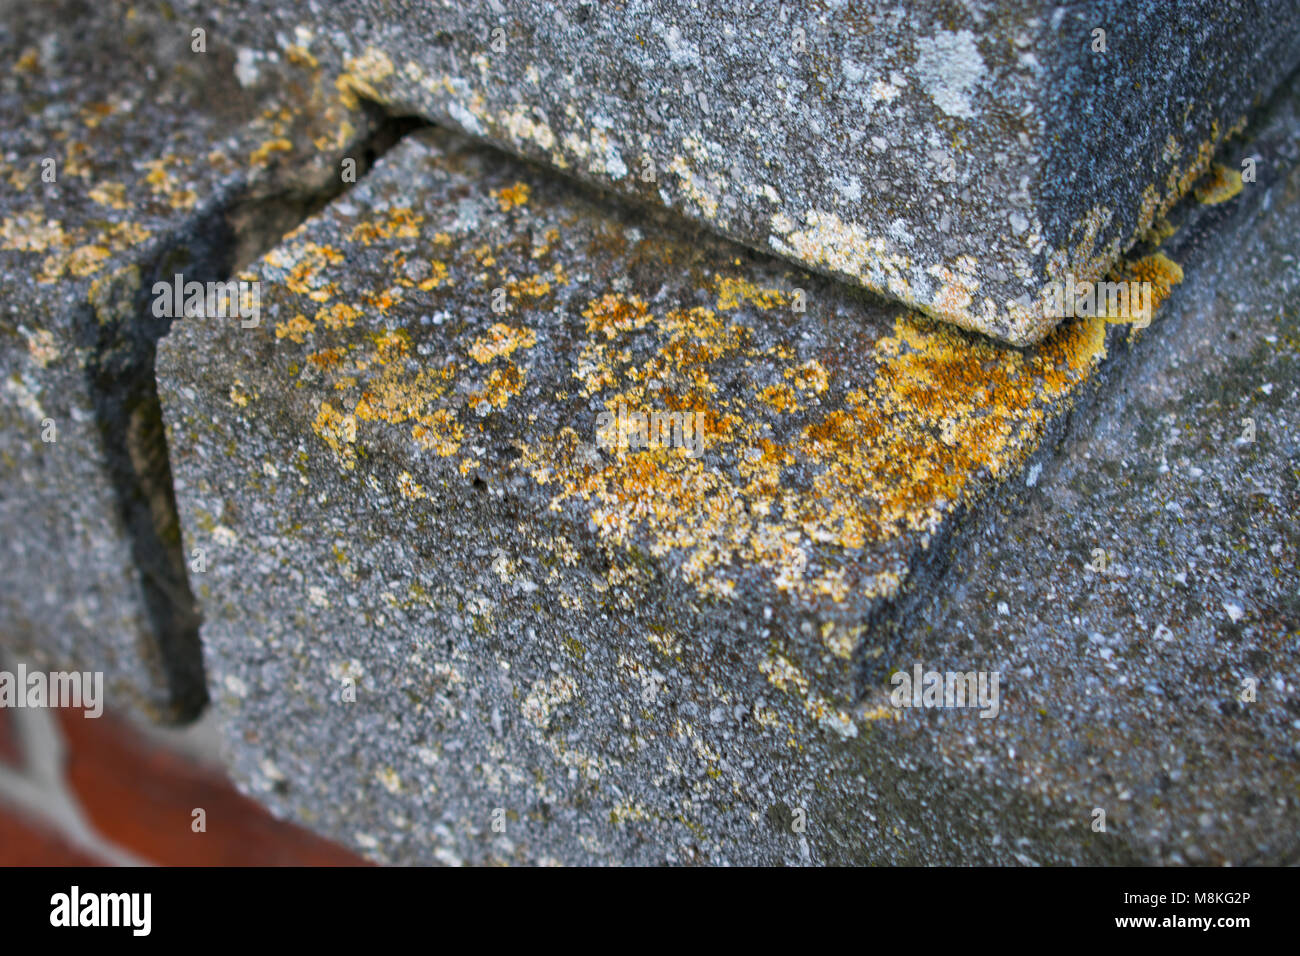 Yellow orange crustose lichens on grey stone still Stock Photo